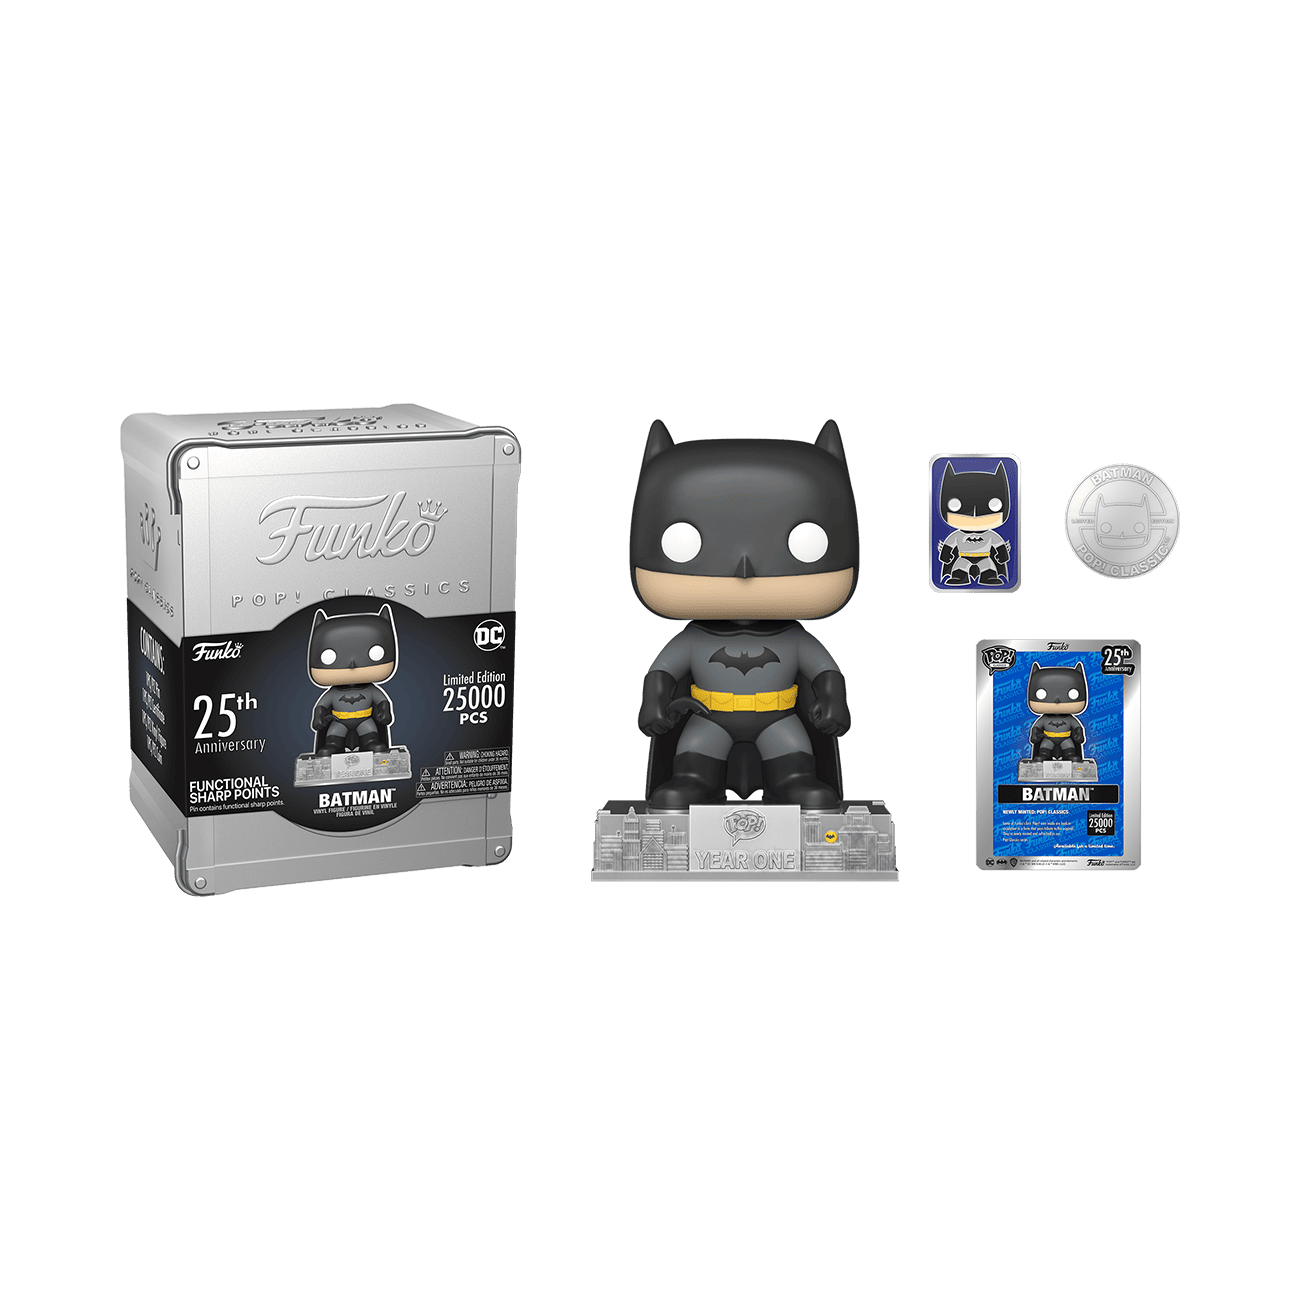 Buy Pop! Classics Batman Funko 25th Anniversary at Funko.